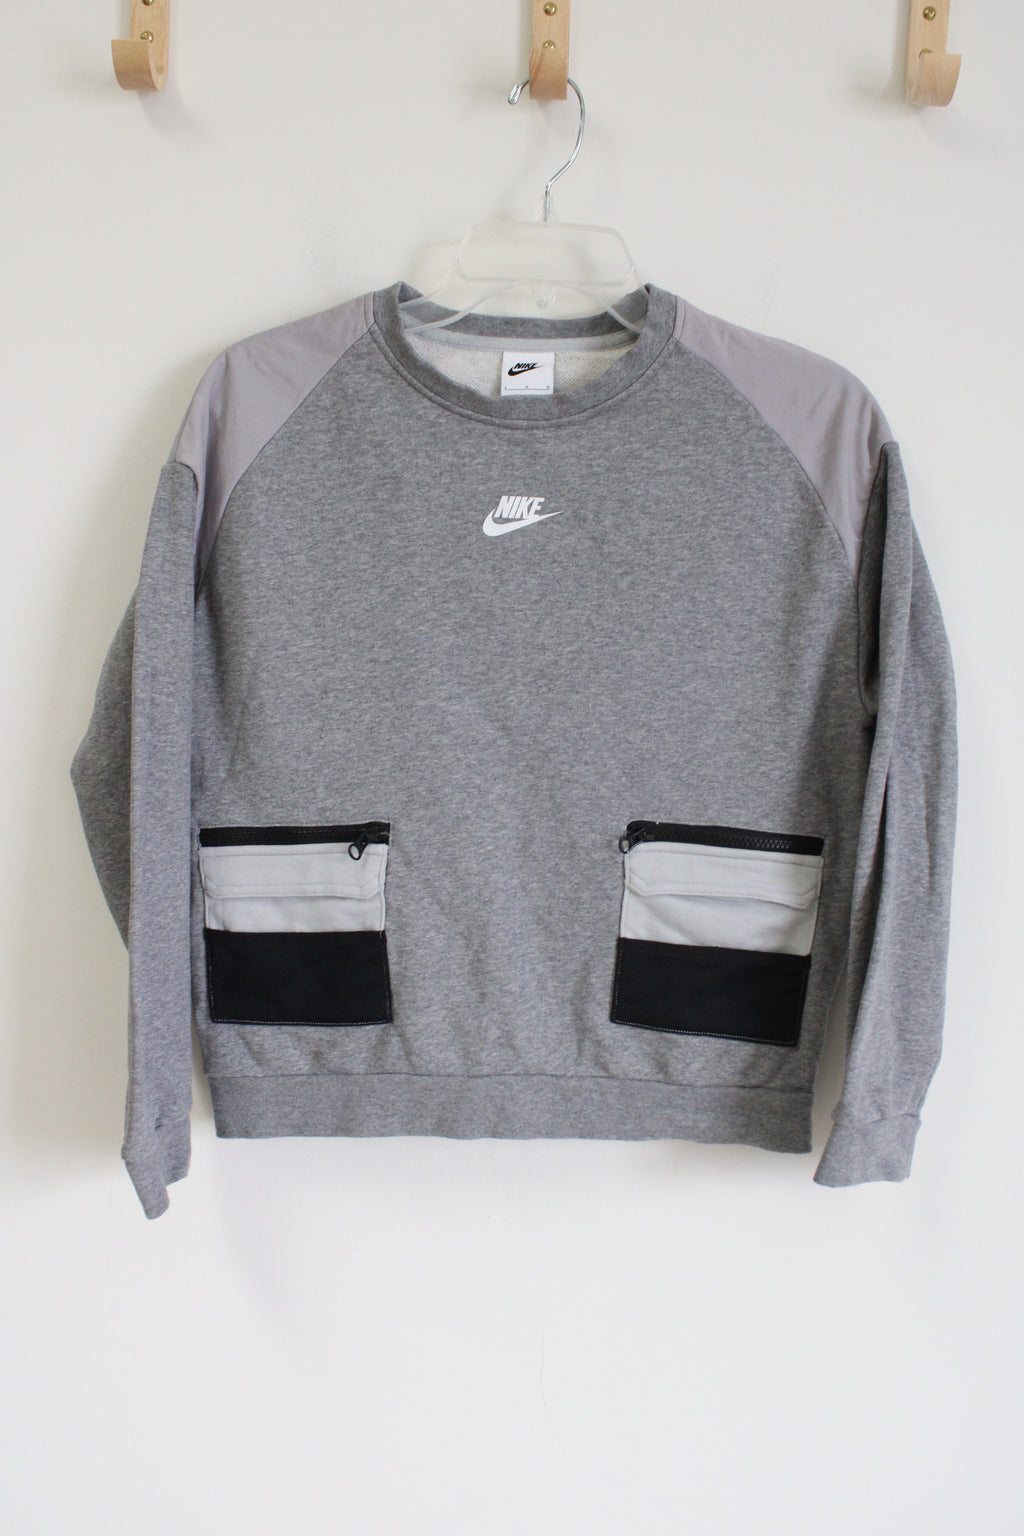 Nike Gray Pocket Sweatshirt | Youth L (14/16)